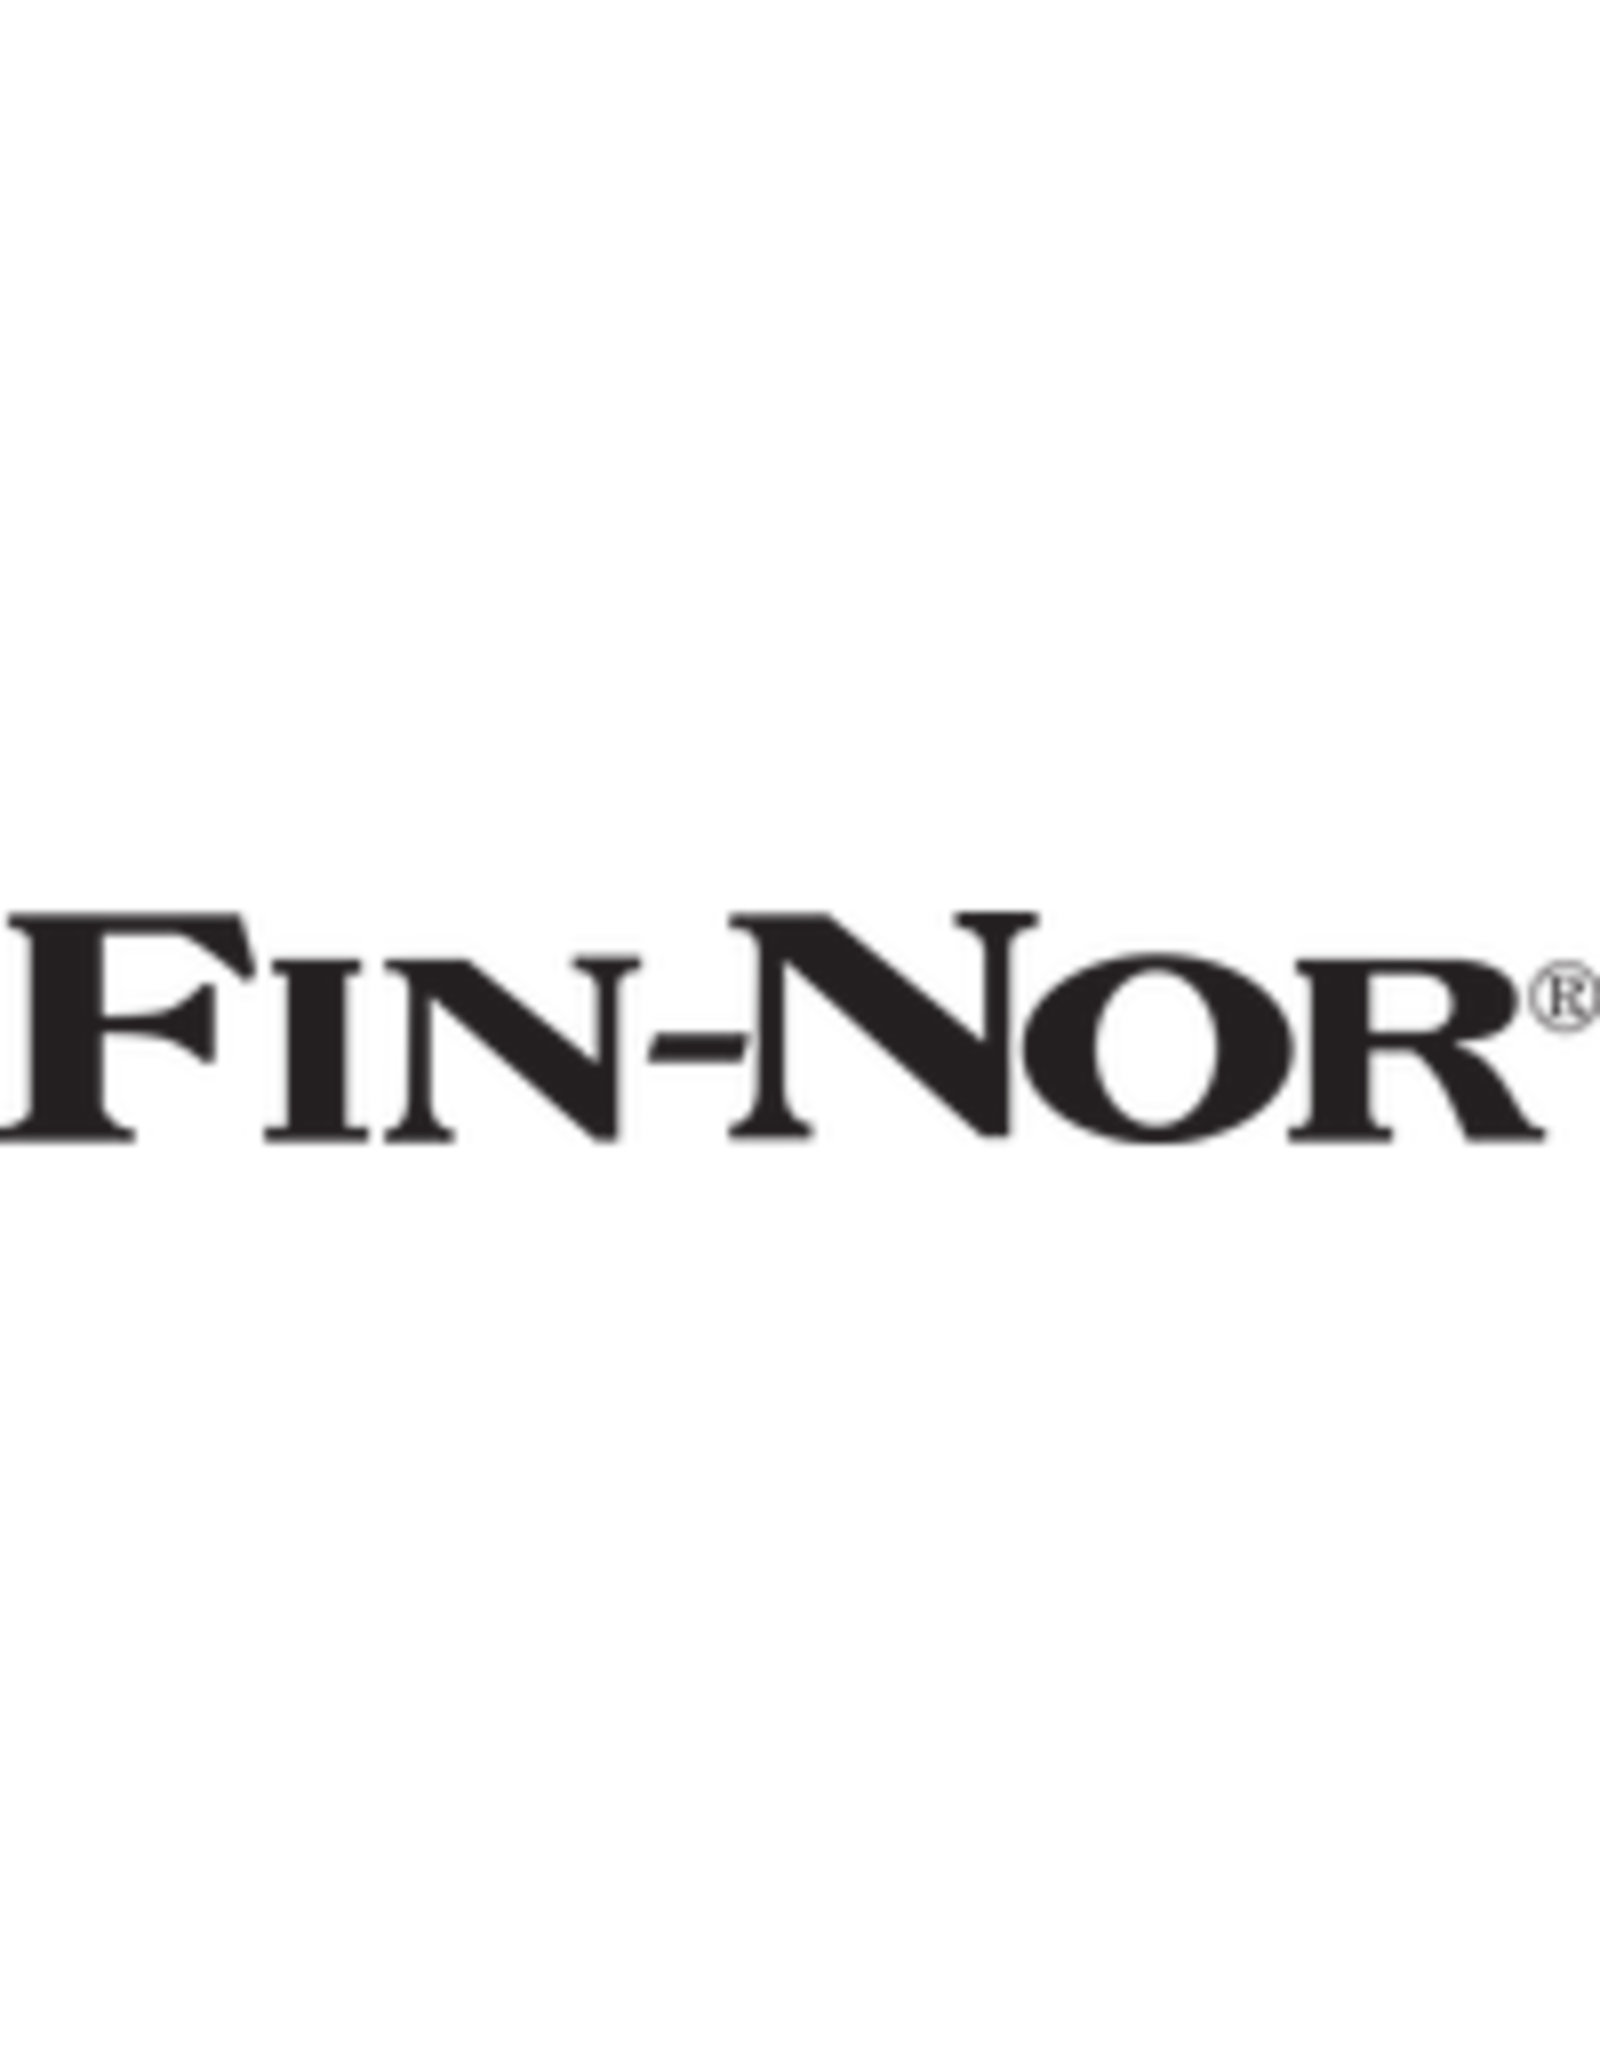 Fin-Nor KT318-01 CRANK HANDLE